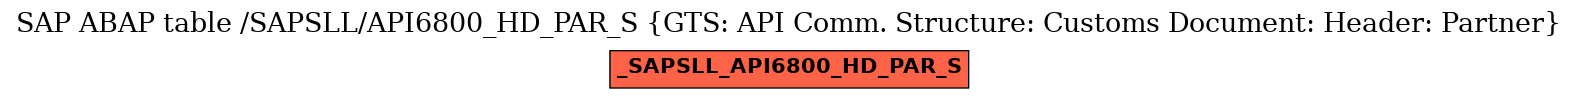 E-R Diagram for table /SAPSLL/API6800_HD_PAR_S (GTS: API Comm. Structure: Customs Document: Header: Partner)